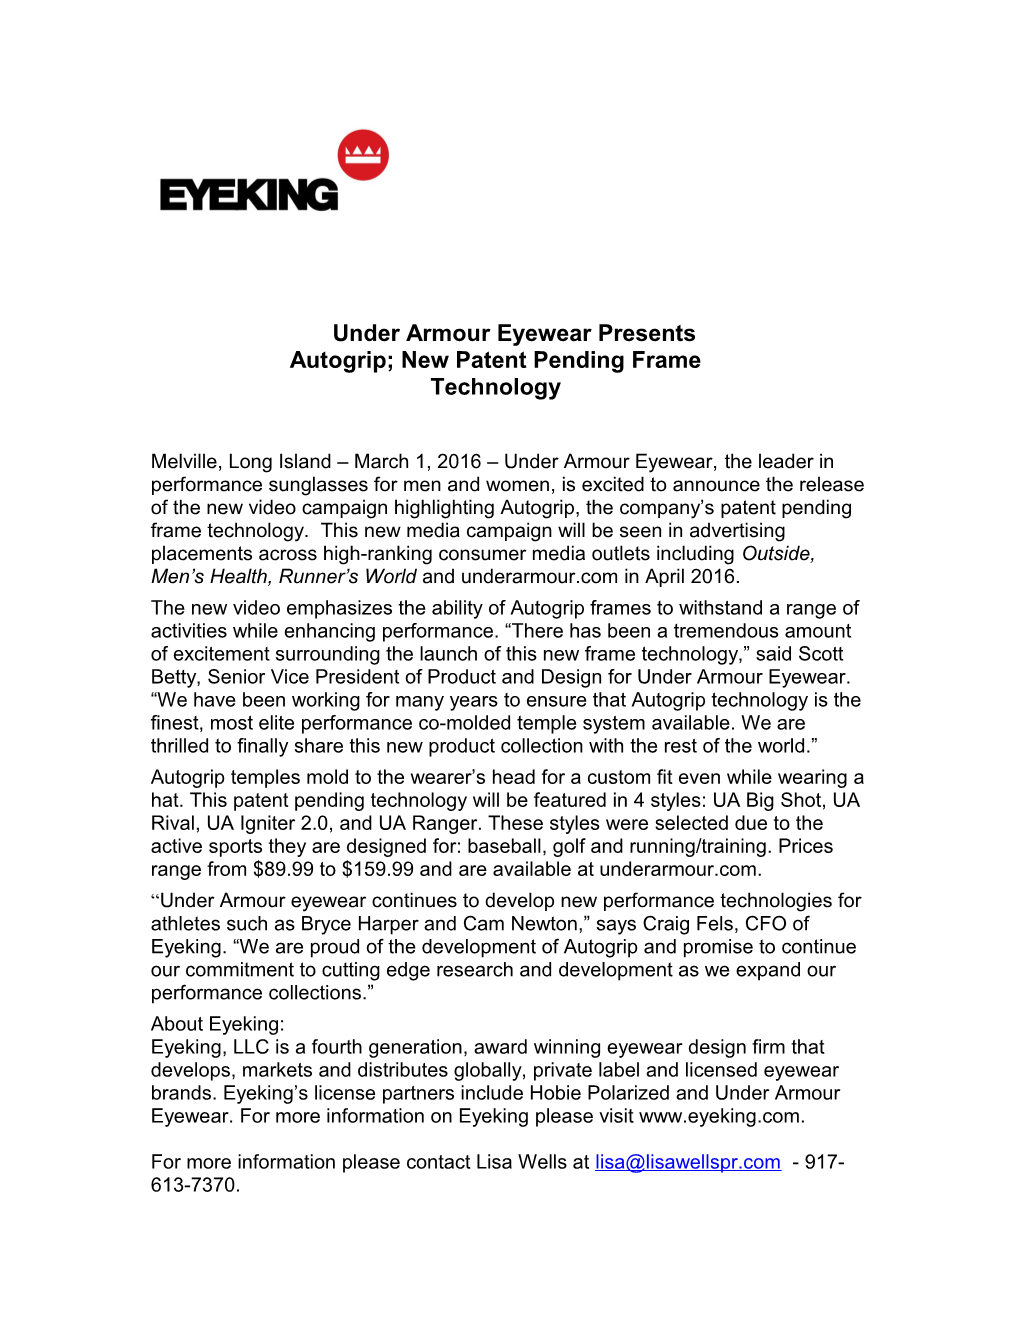 Under Armour Eyewear Presents Autogrip; New Patent Pending Frame Technology